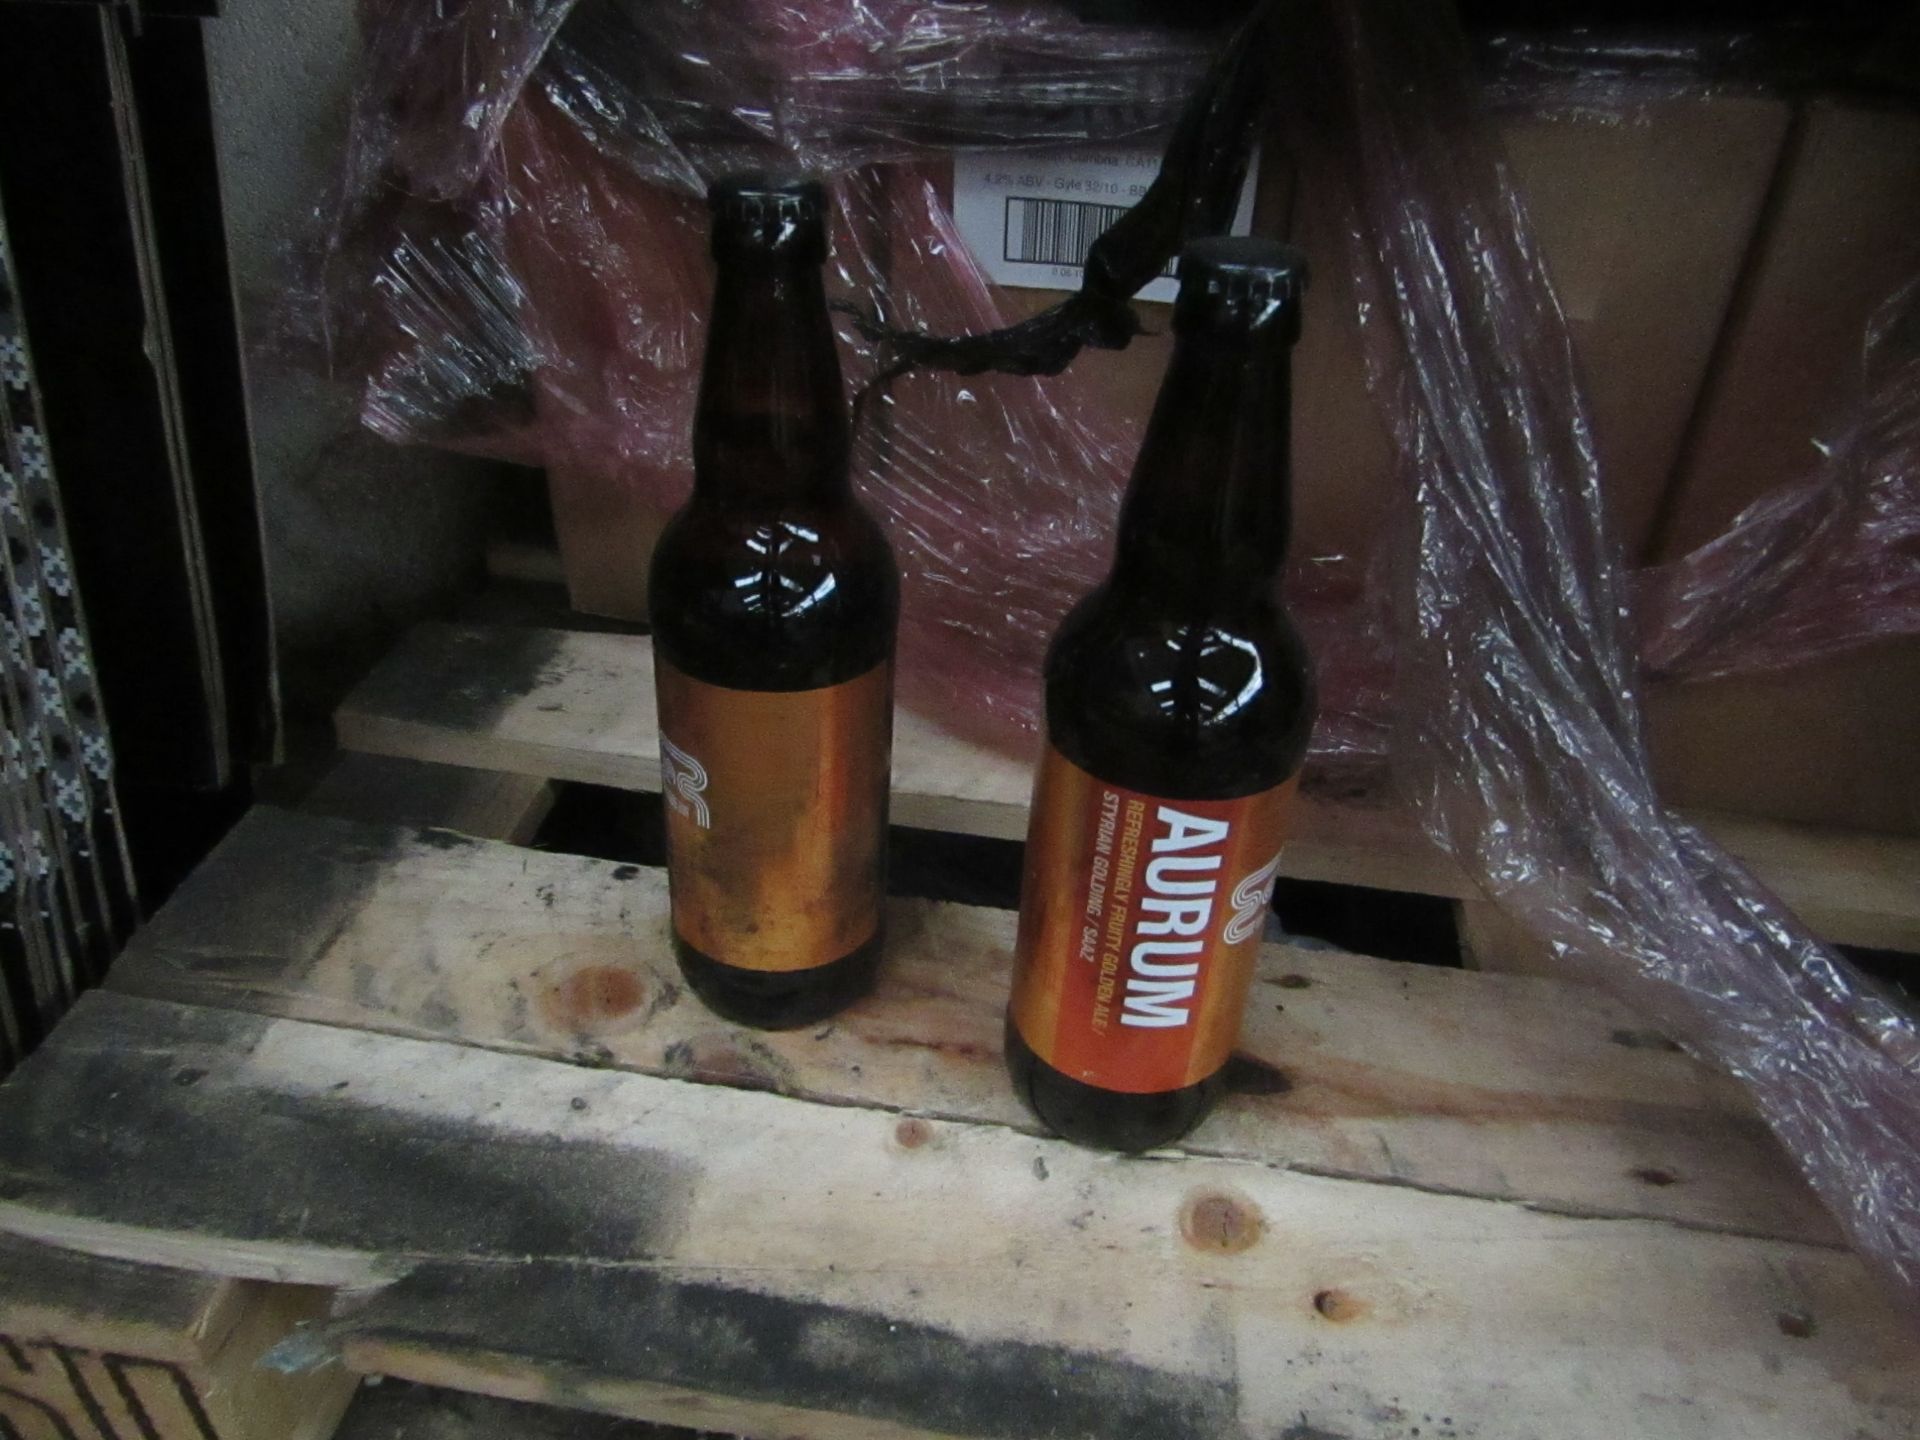 2x Boxes each Containing 8x Eden River Brew Co - Aurum - Refreshingly Fruity Golden Ale - ALC 4.4%